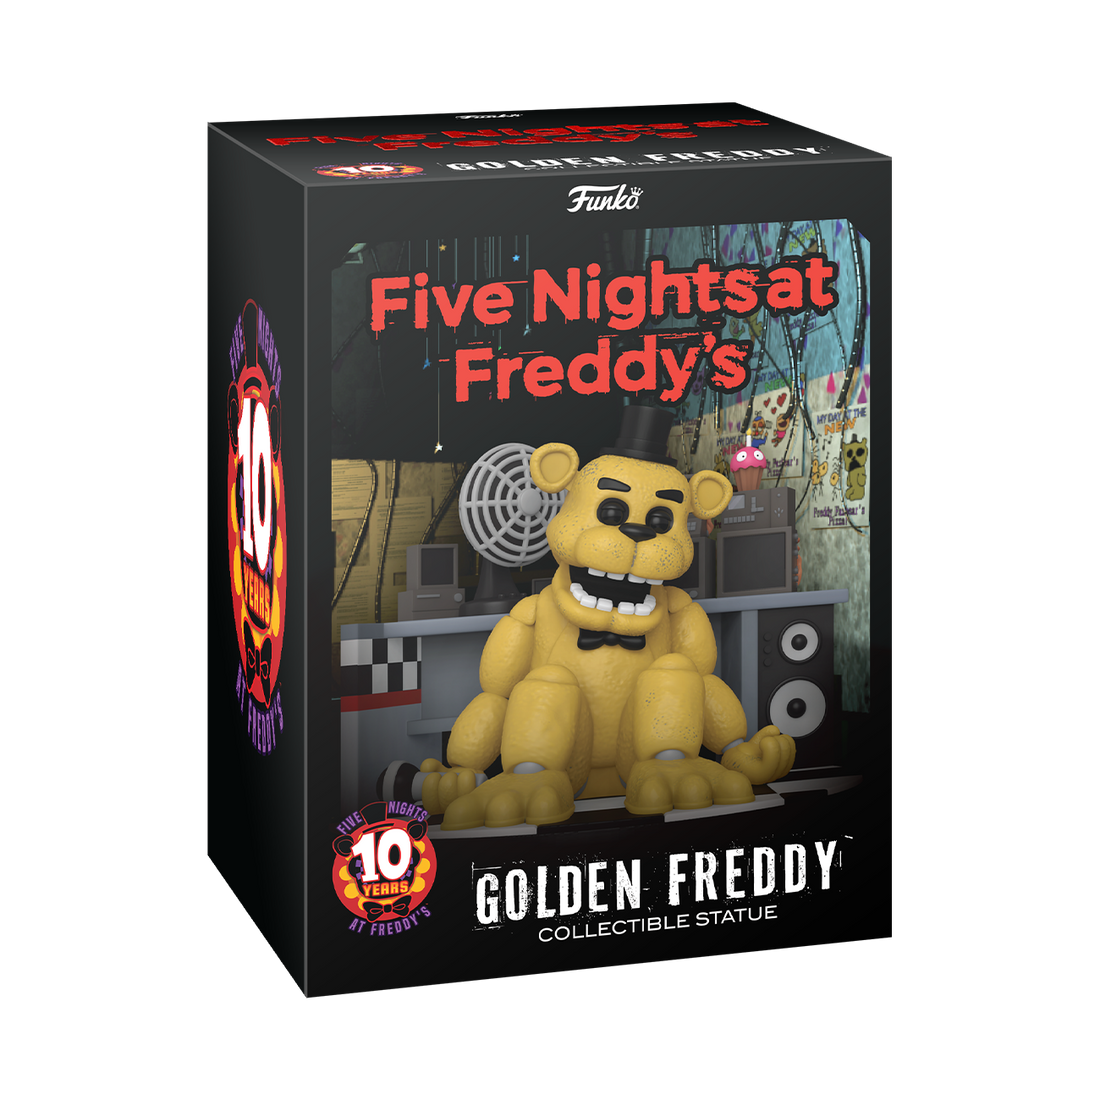 Funko Five Nights at Freddy's Golden Freddy Collectible Statue Funko